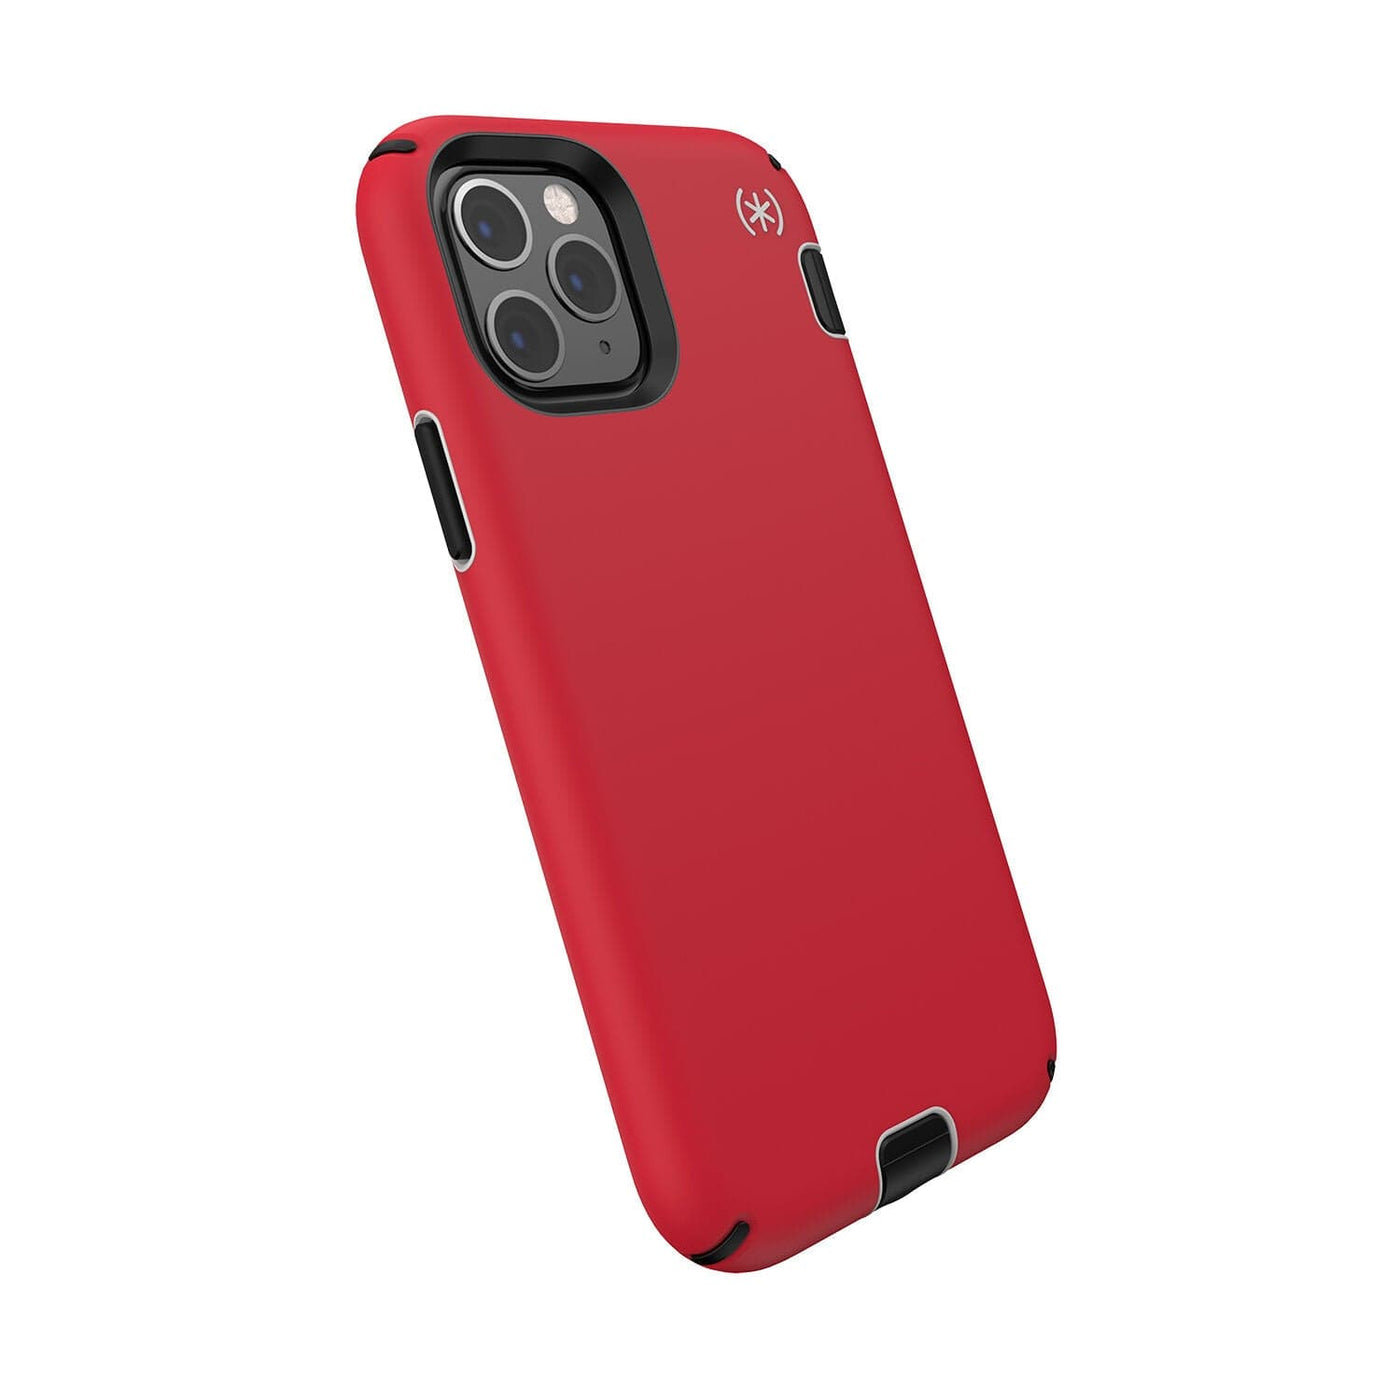 Mild liner gøre ondt Speck Presidio Sport iPhone 11 Pro Cases Best iPhone 11 Pro - $44.95